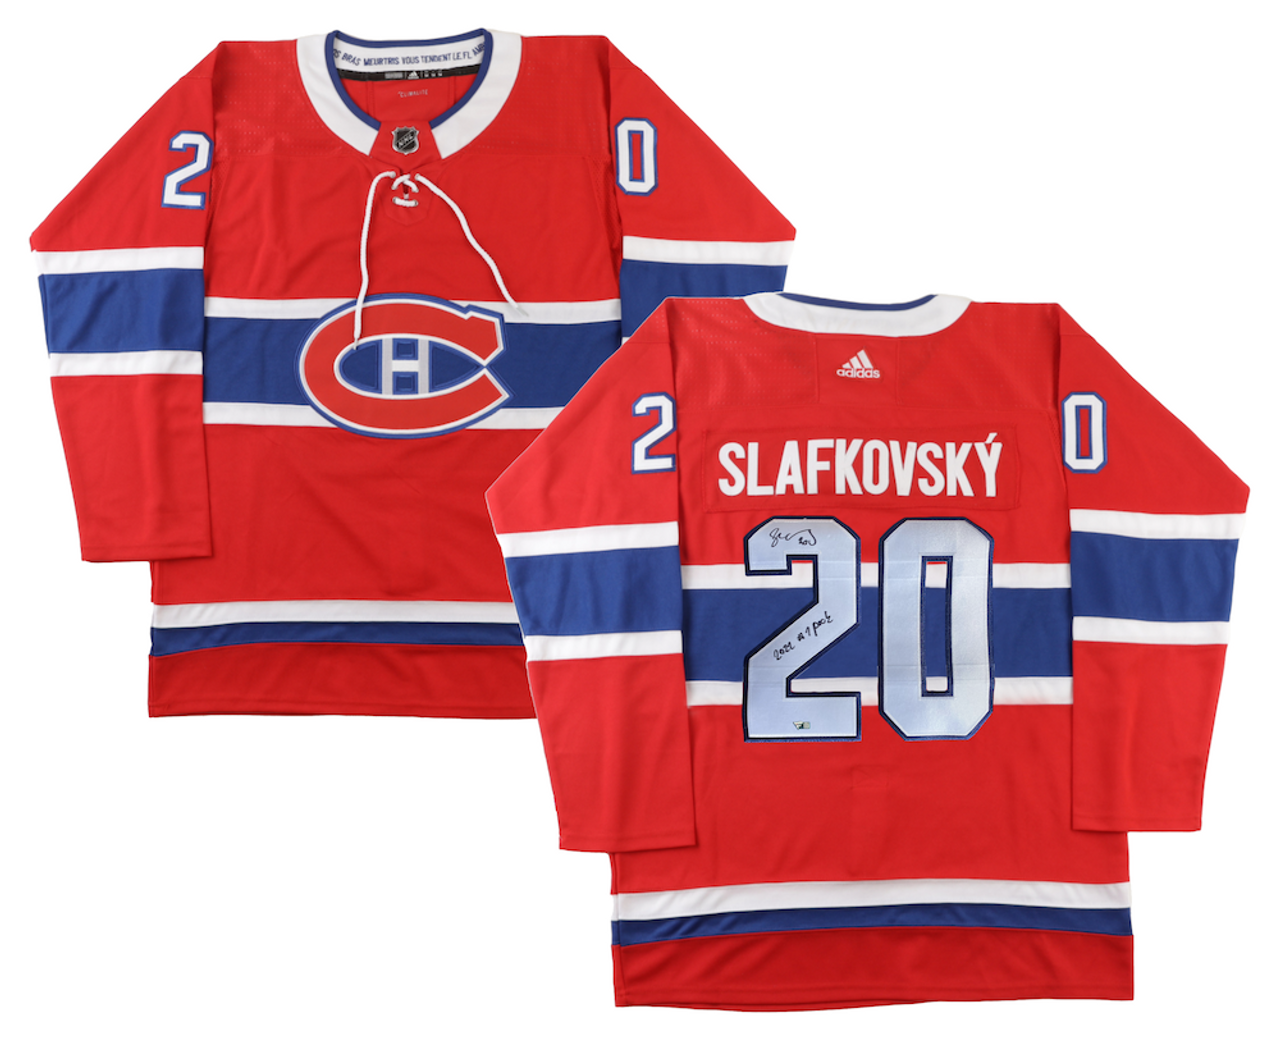 Juraj Slafkovsky Montreal Canadiens Autographed Fanatics Authentic adidas  White Authentic Jersey with 2022 #1 Pick Inscription